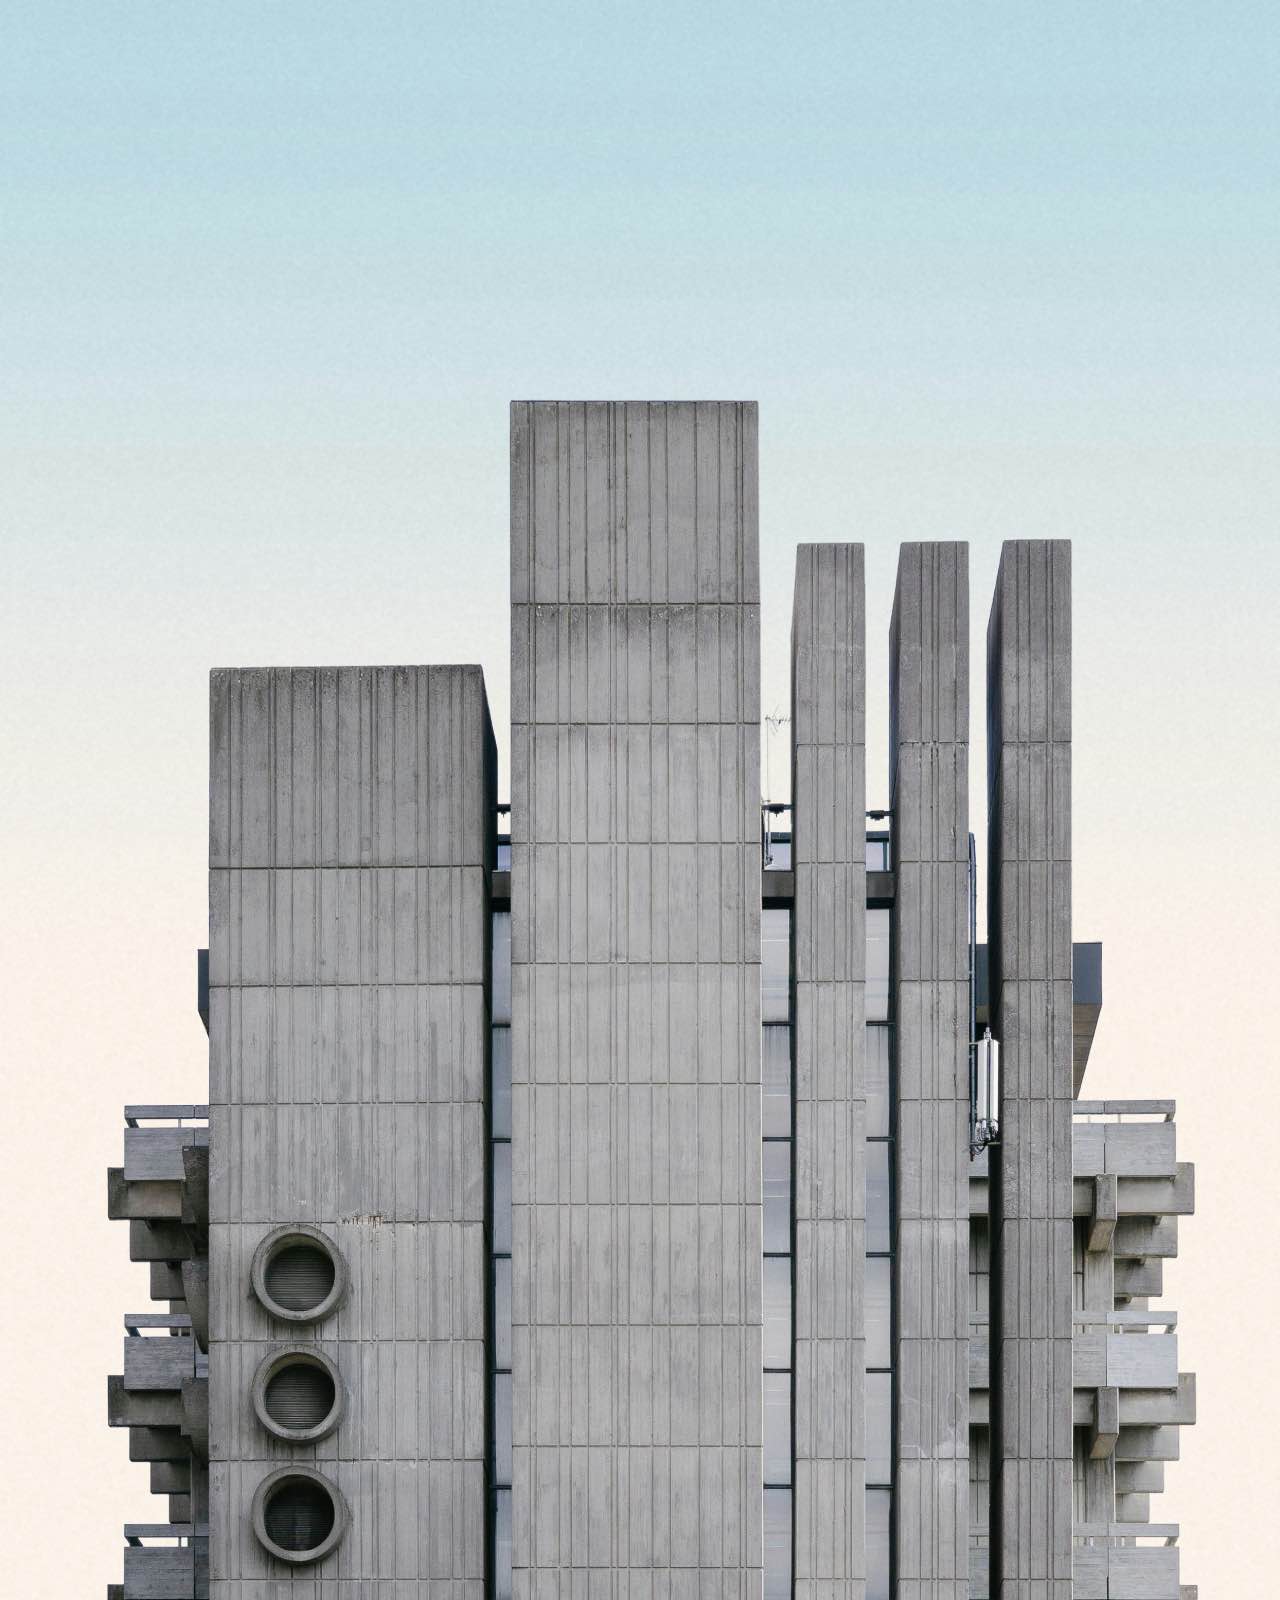 arquitectura brutalista de hormigón en dinamarca